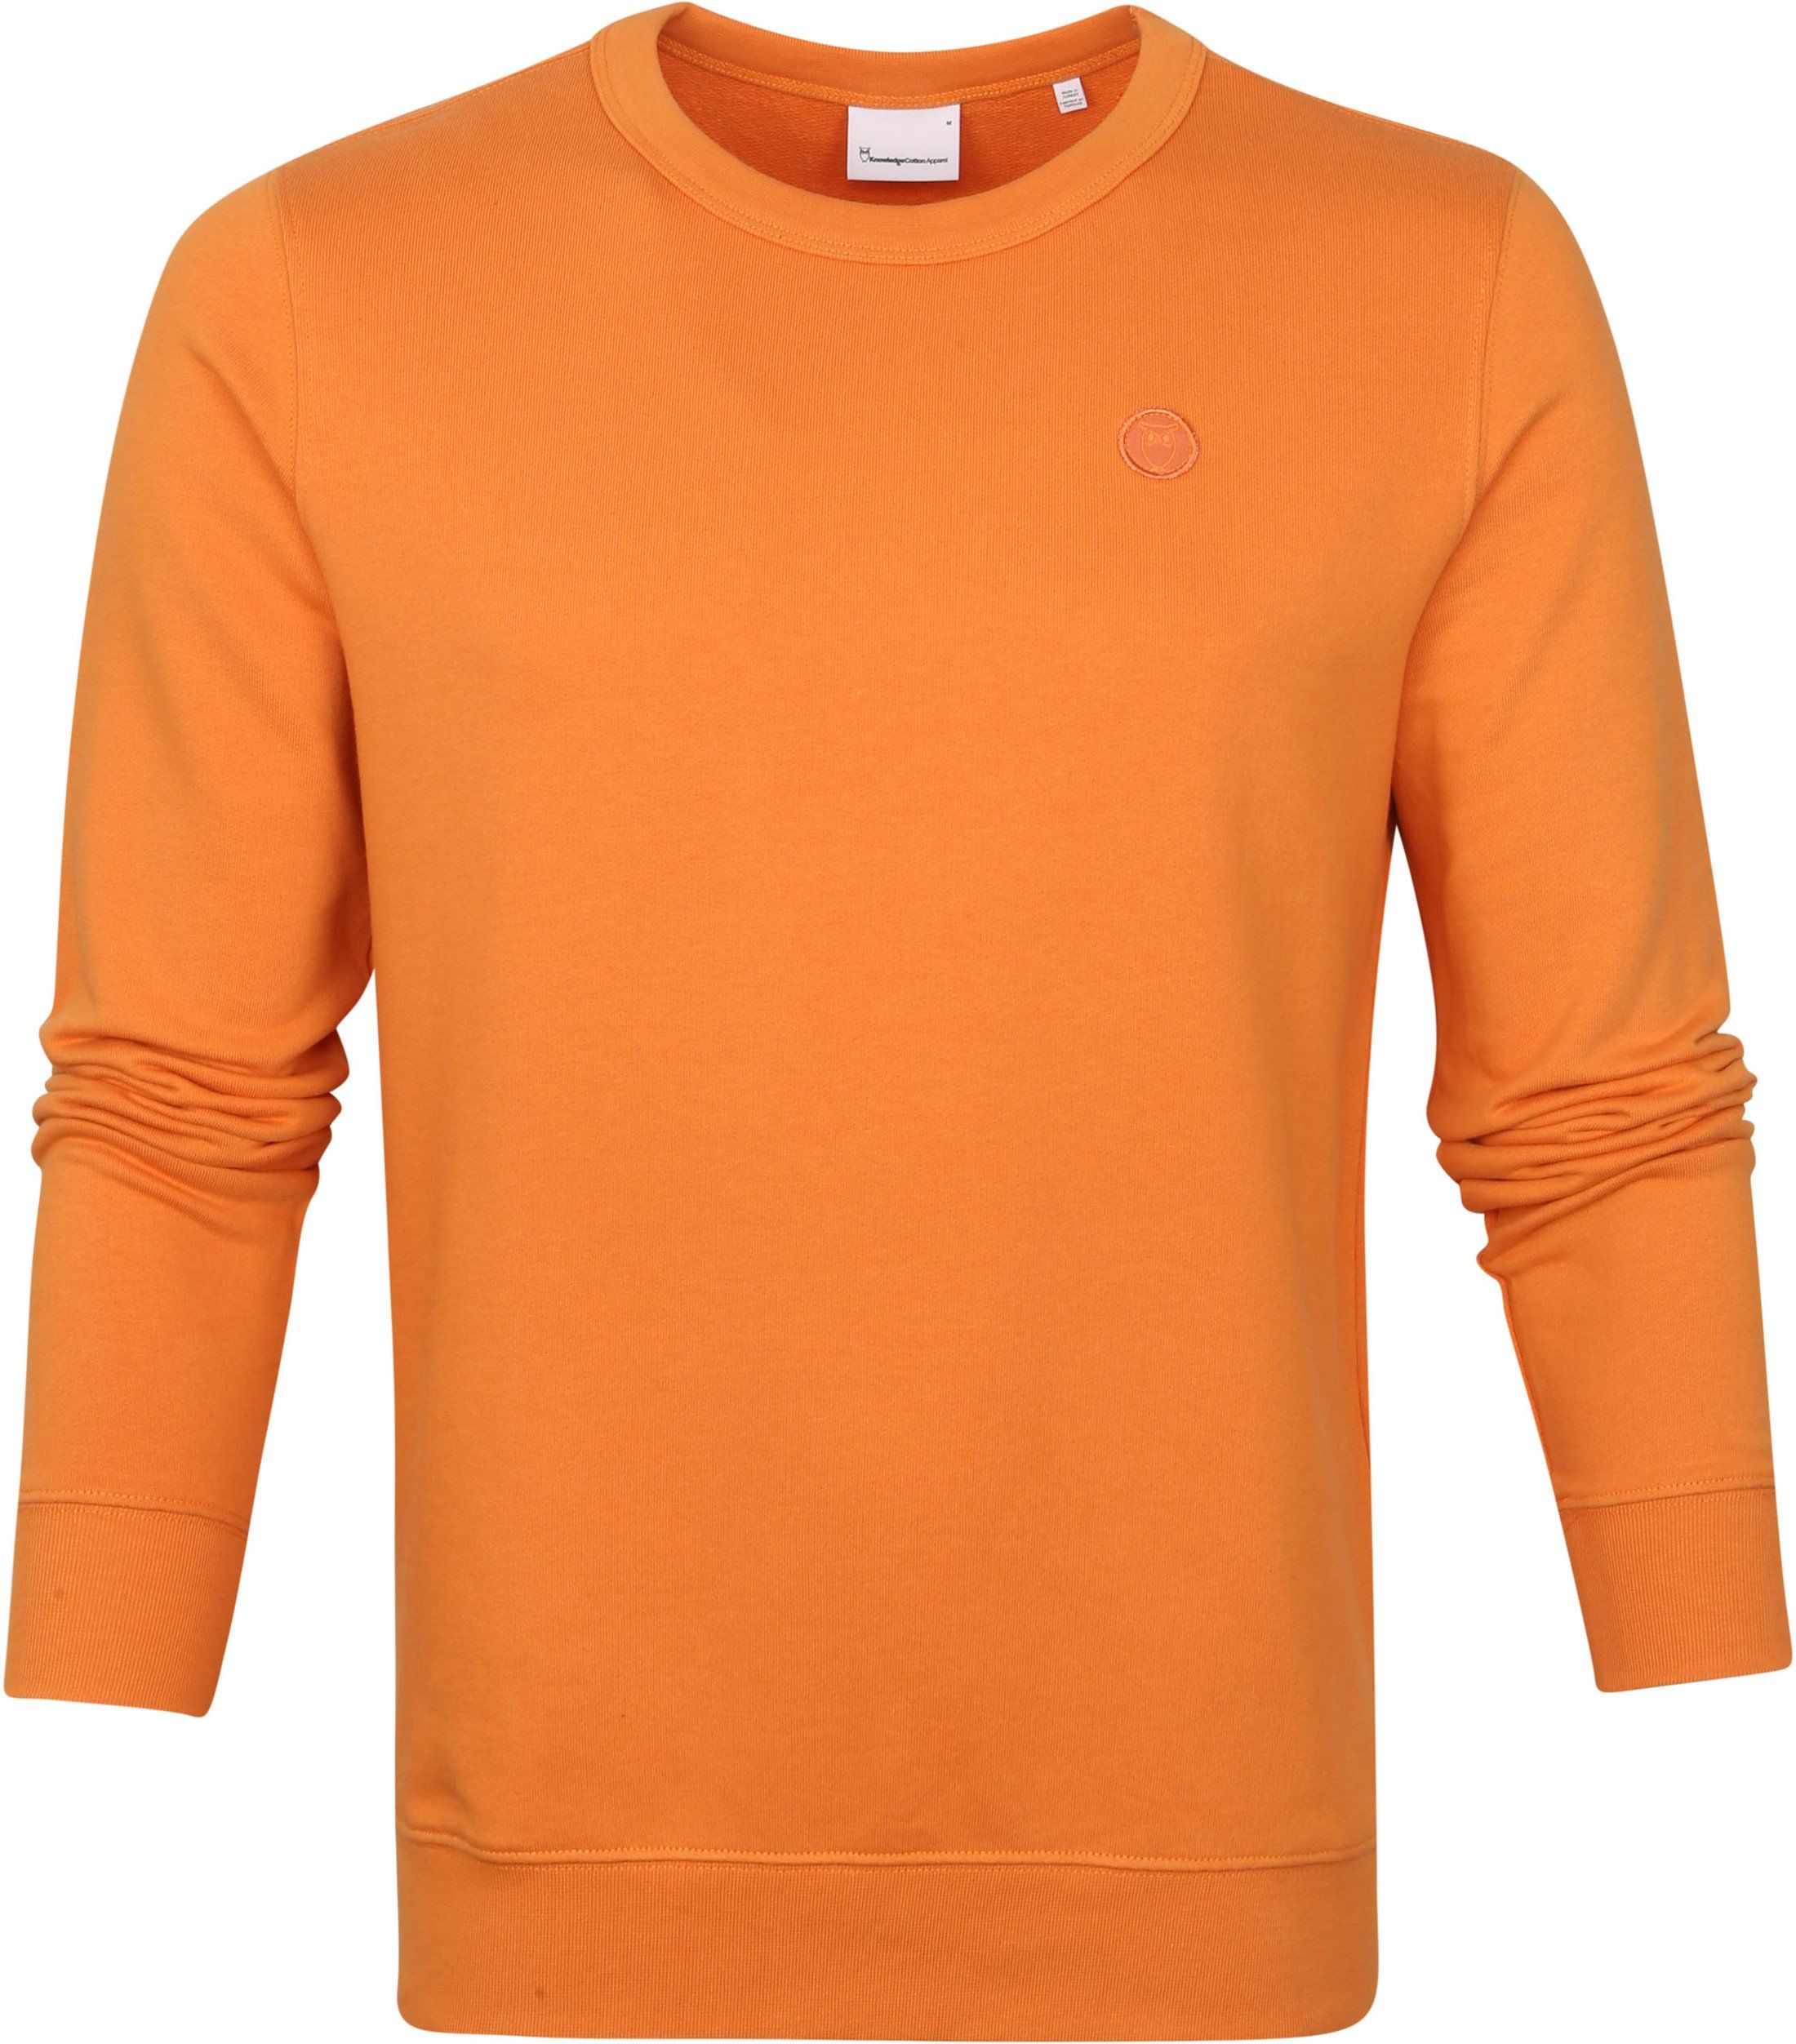 KnowledgeCotton Apparel Elm Sweater Orange size L